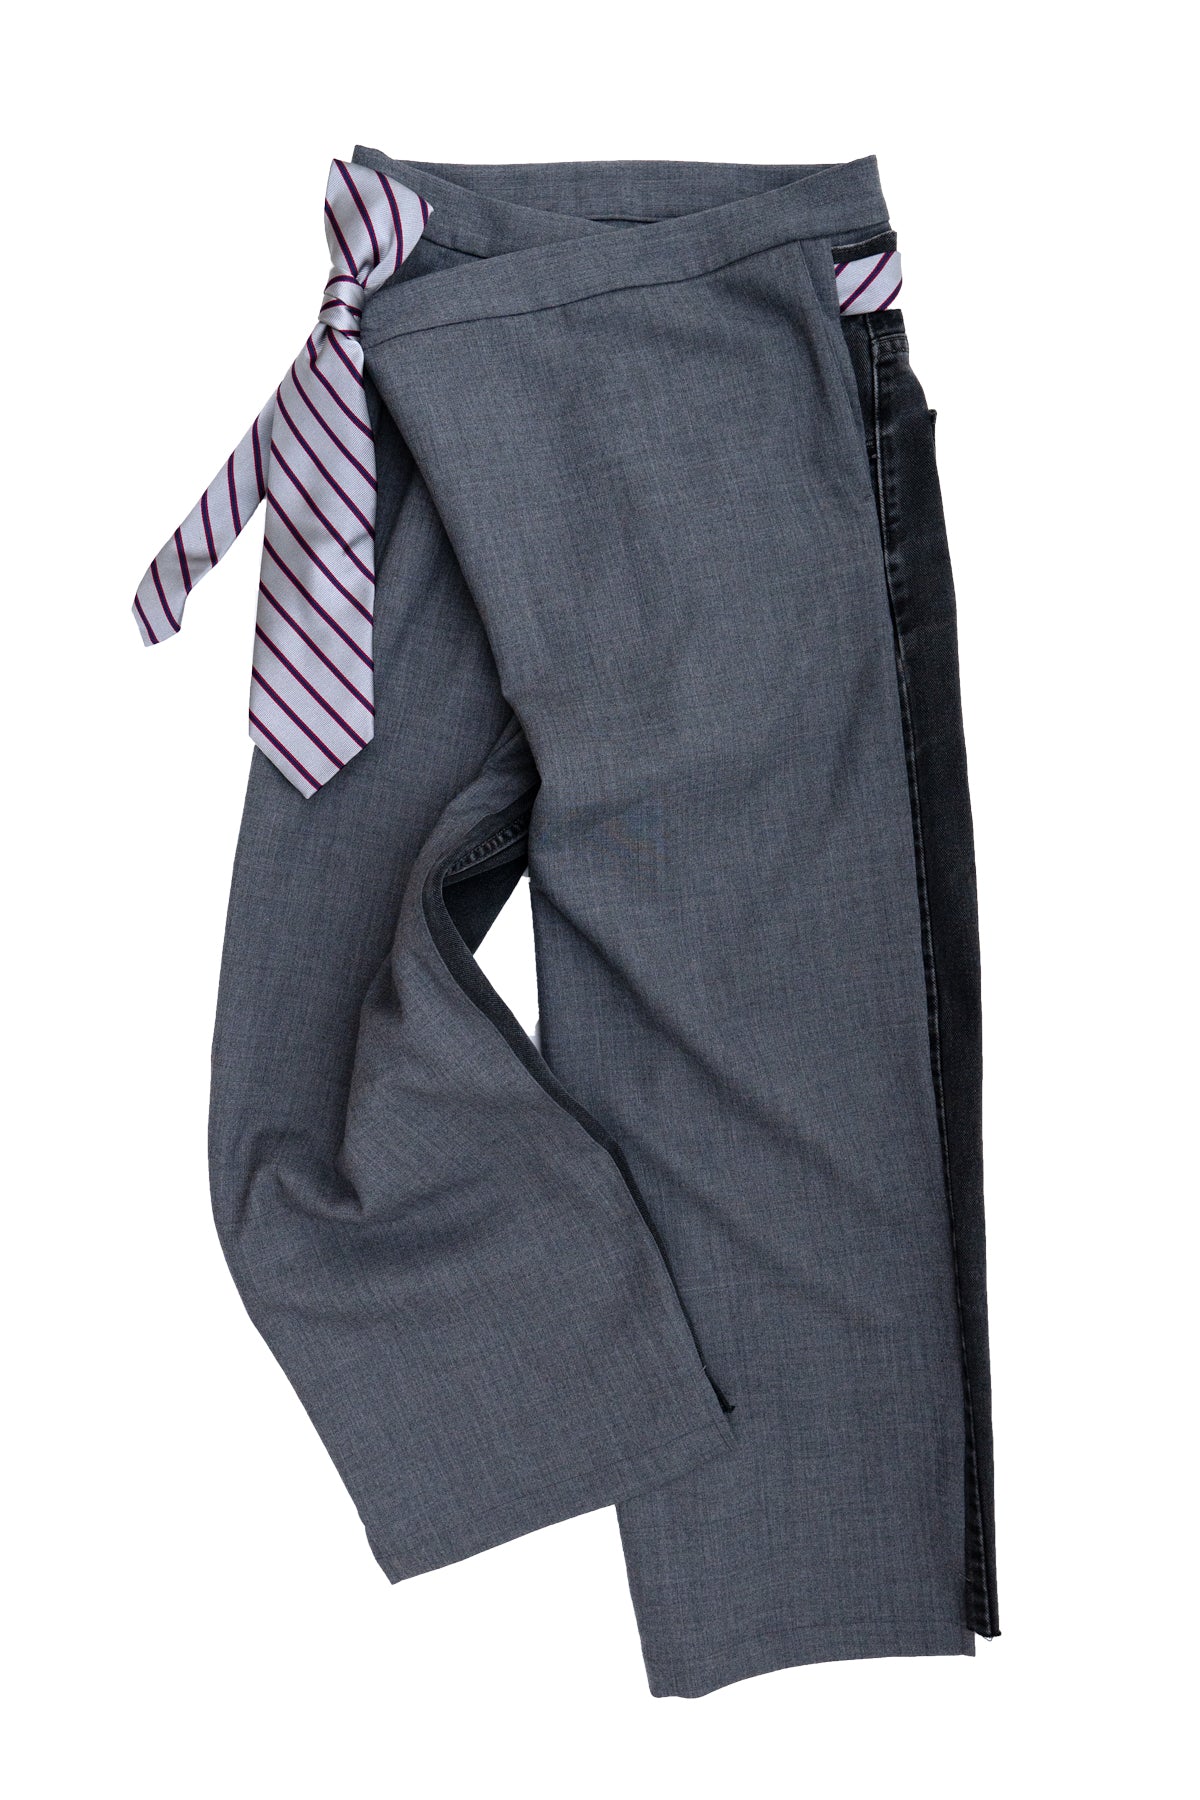 CASE2-gray tie